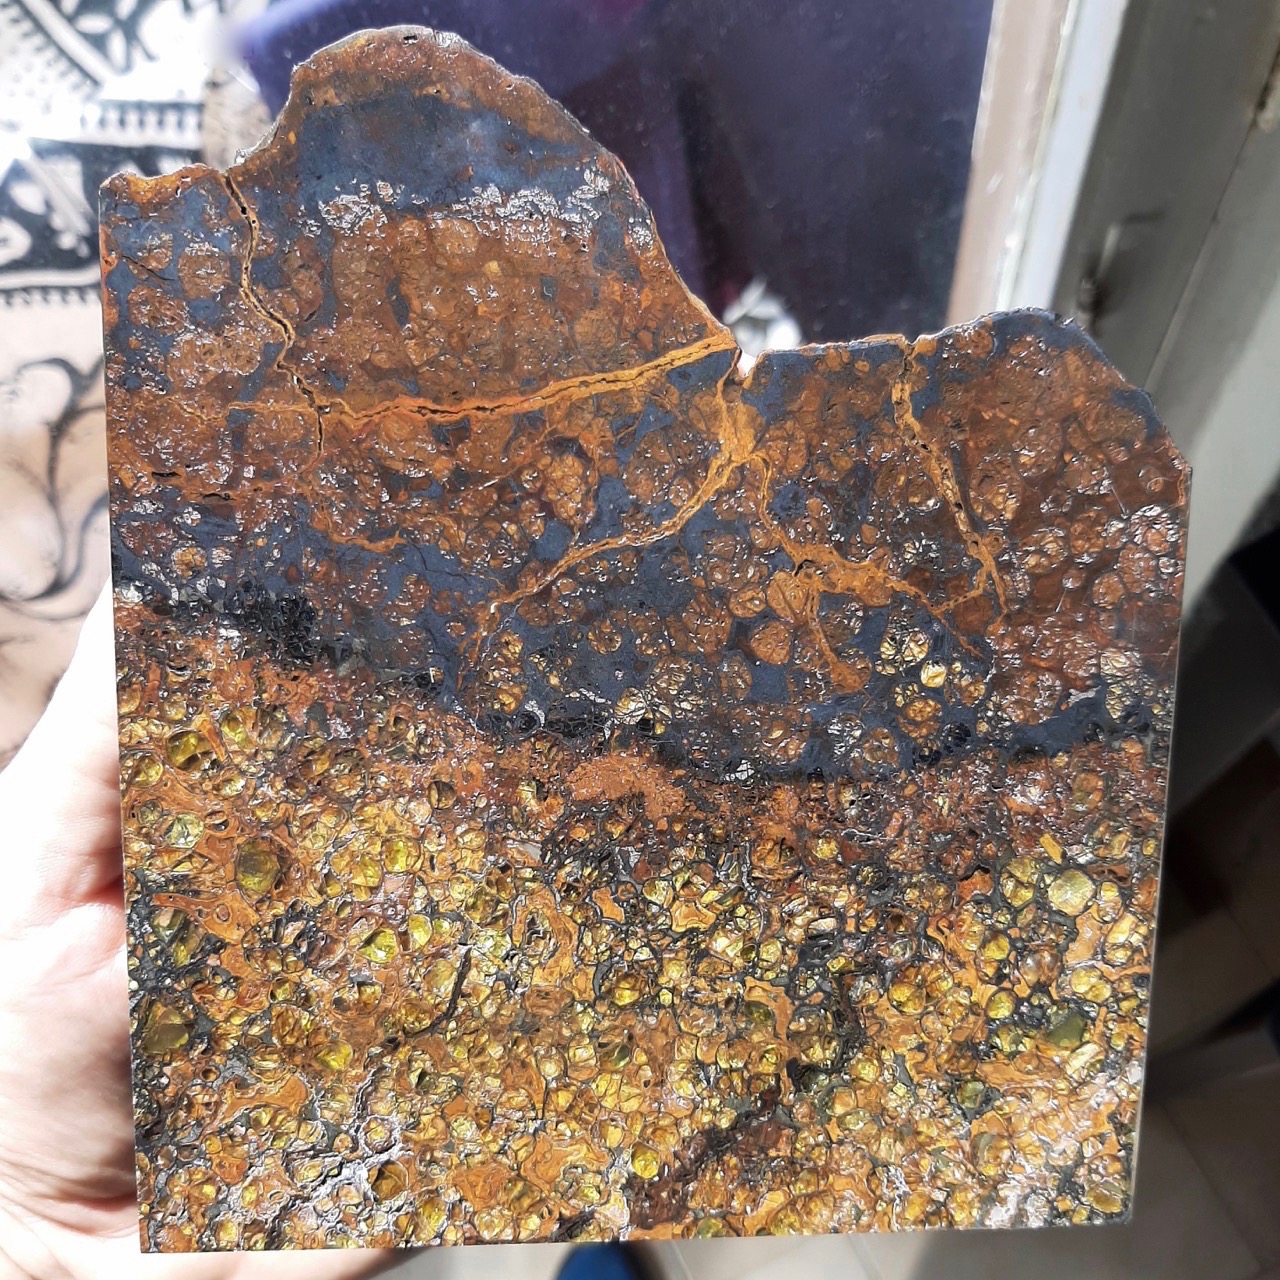 Jepara meteorite. Gem Quality pallasite with crust.